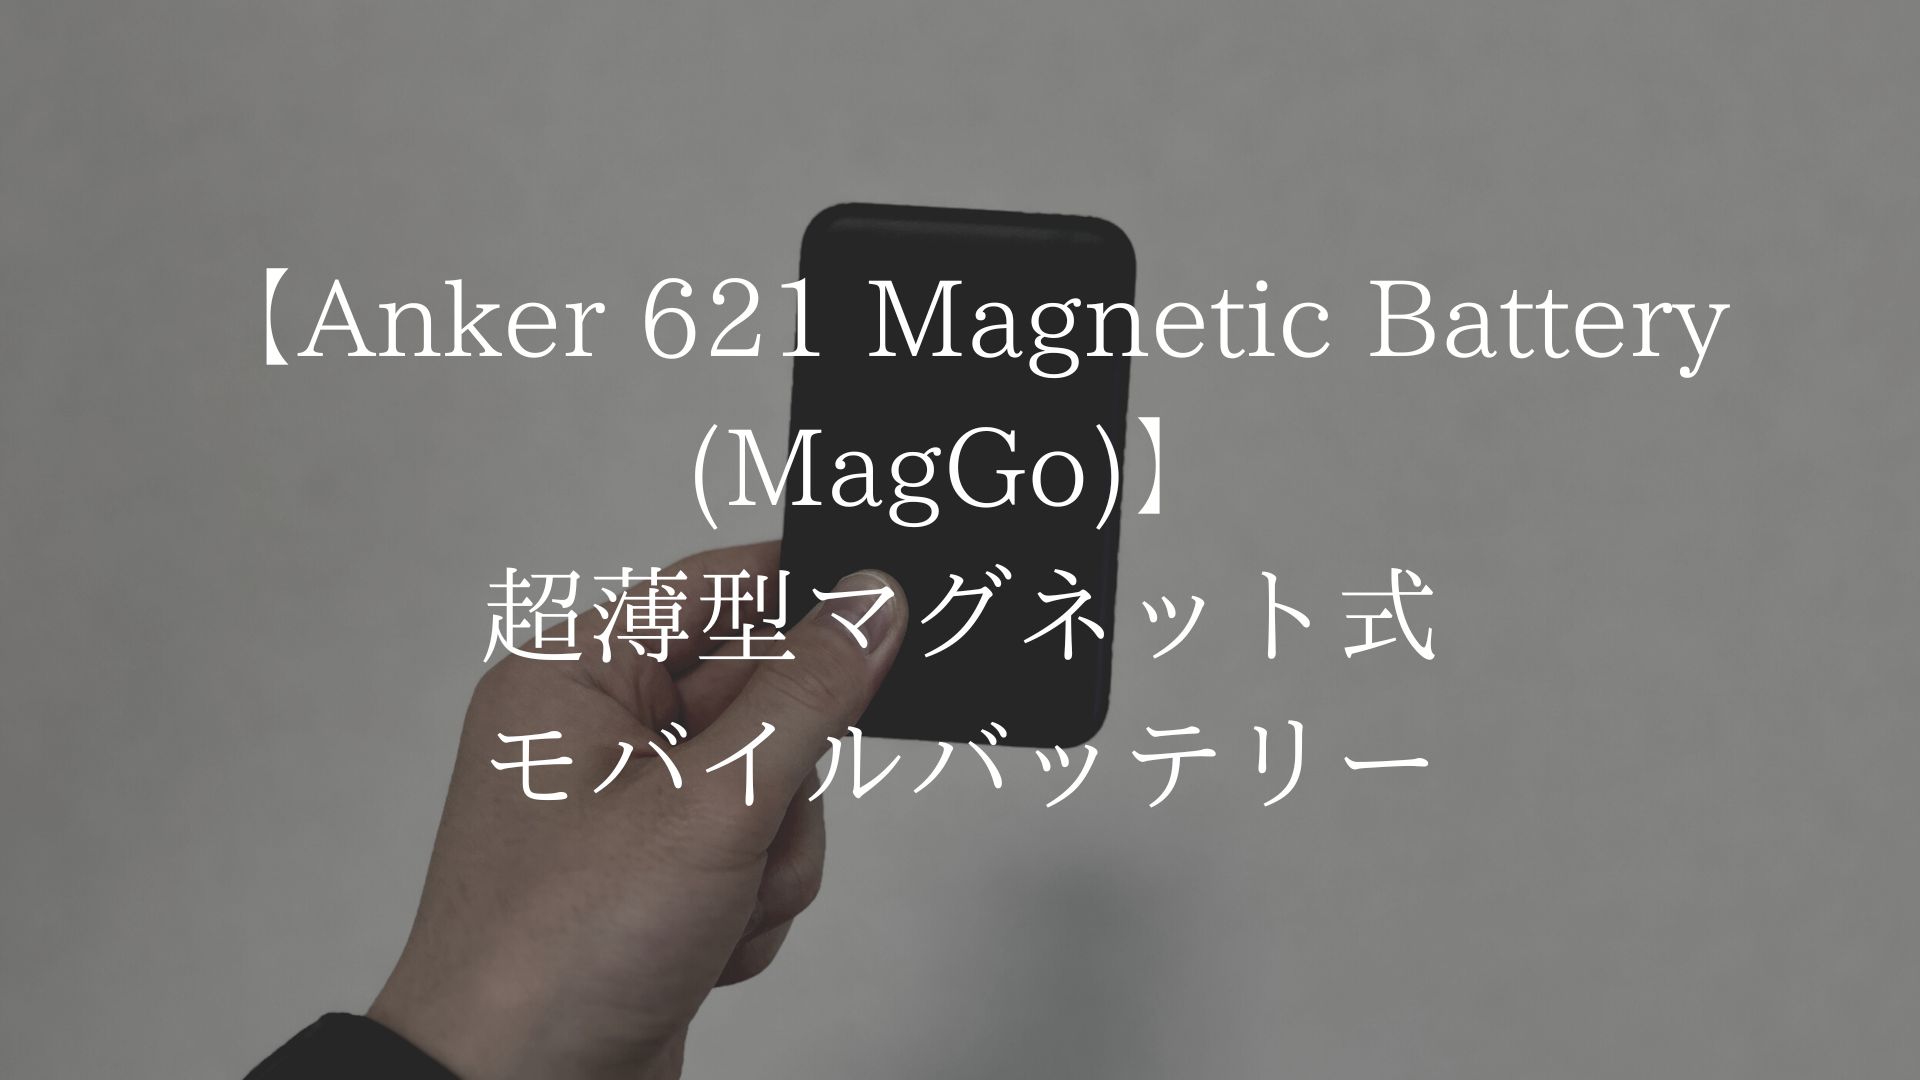 Anker 621 Magnetic Battery (MagGo)のアイキャッチ画像